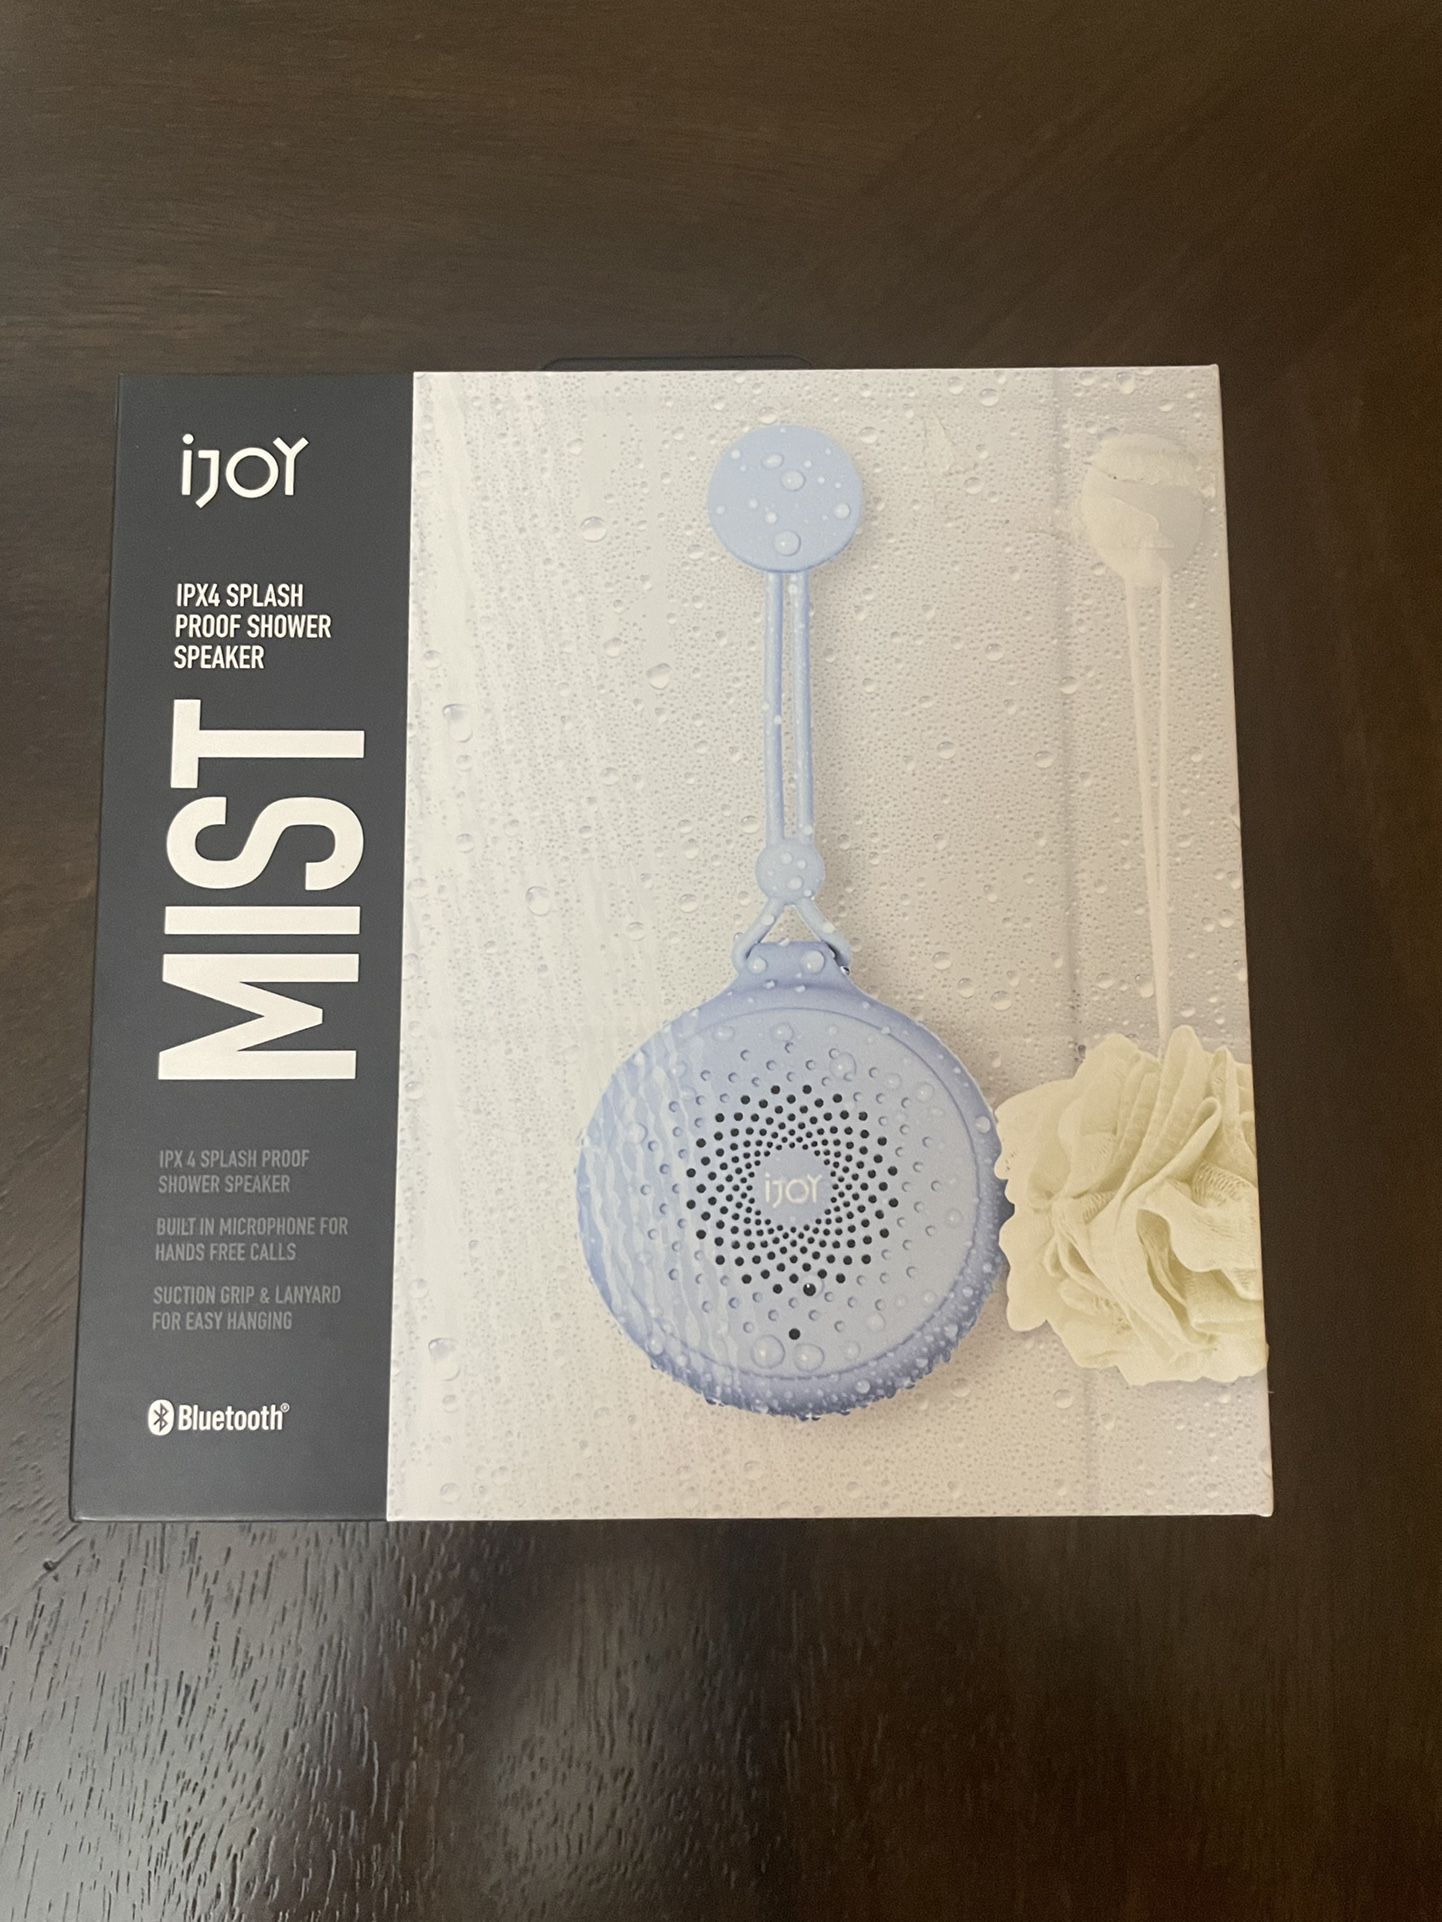 iJoy IPX4 Splash Proof Shower Speaker